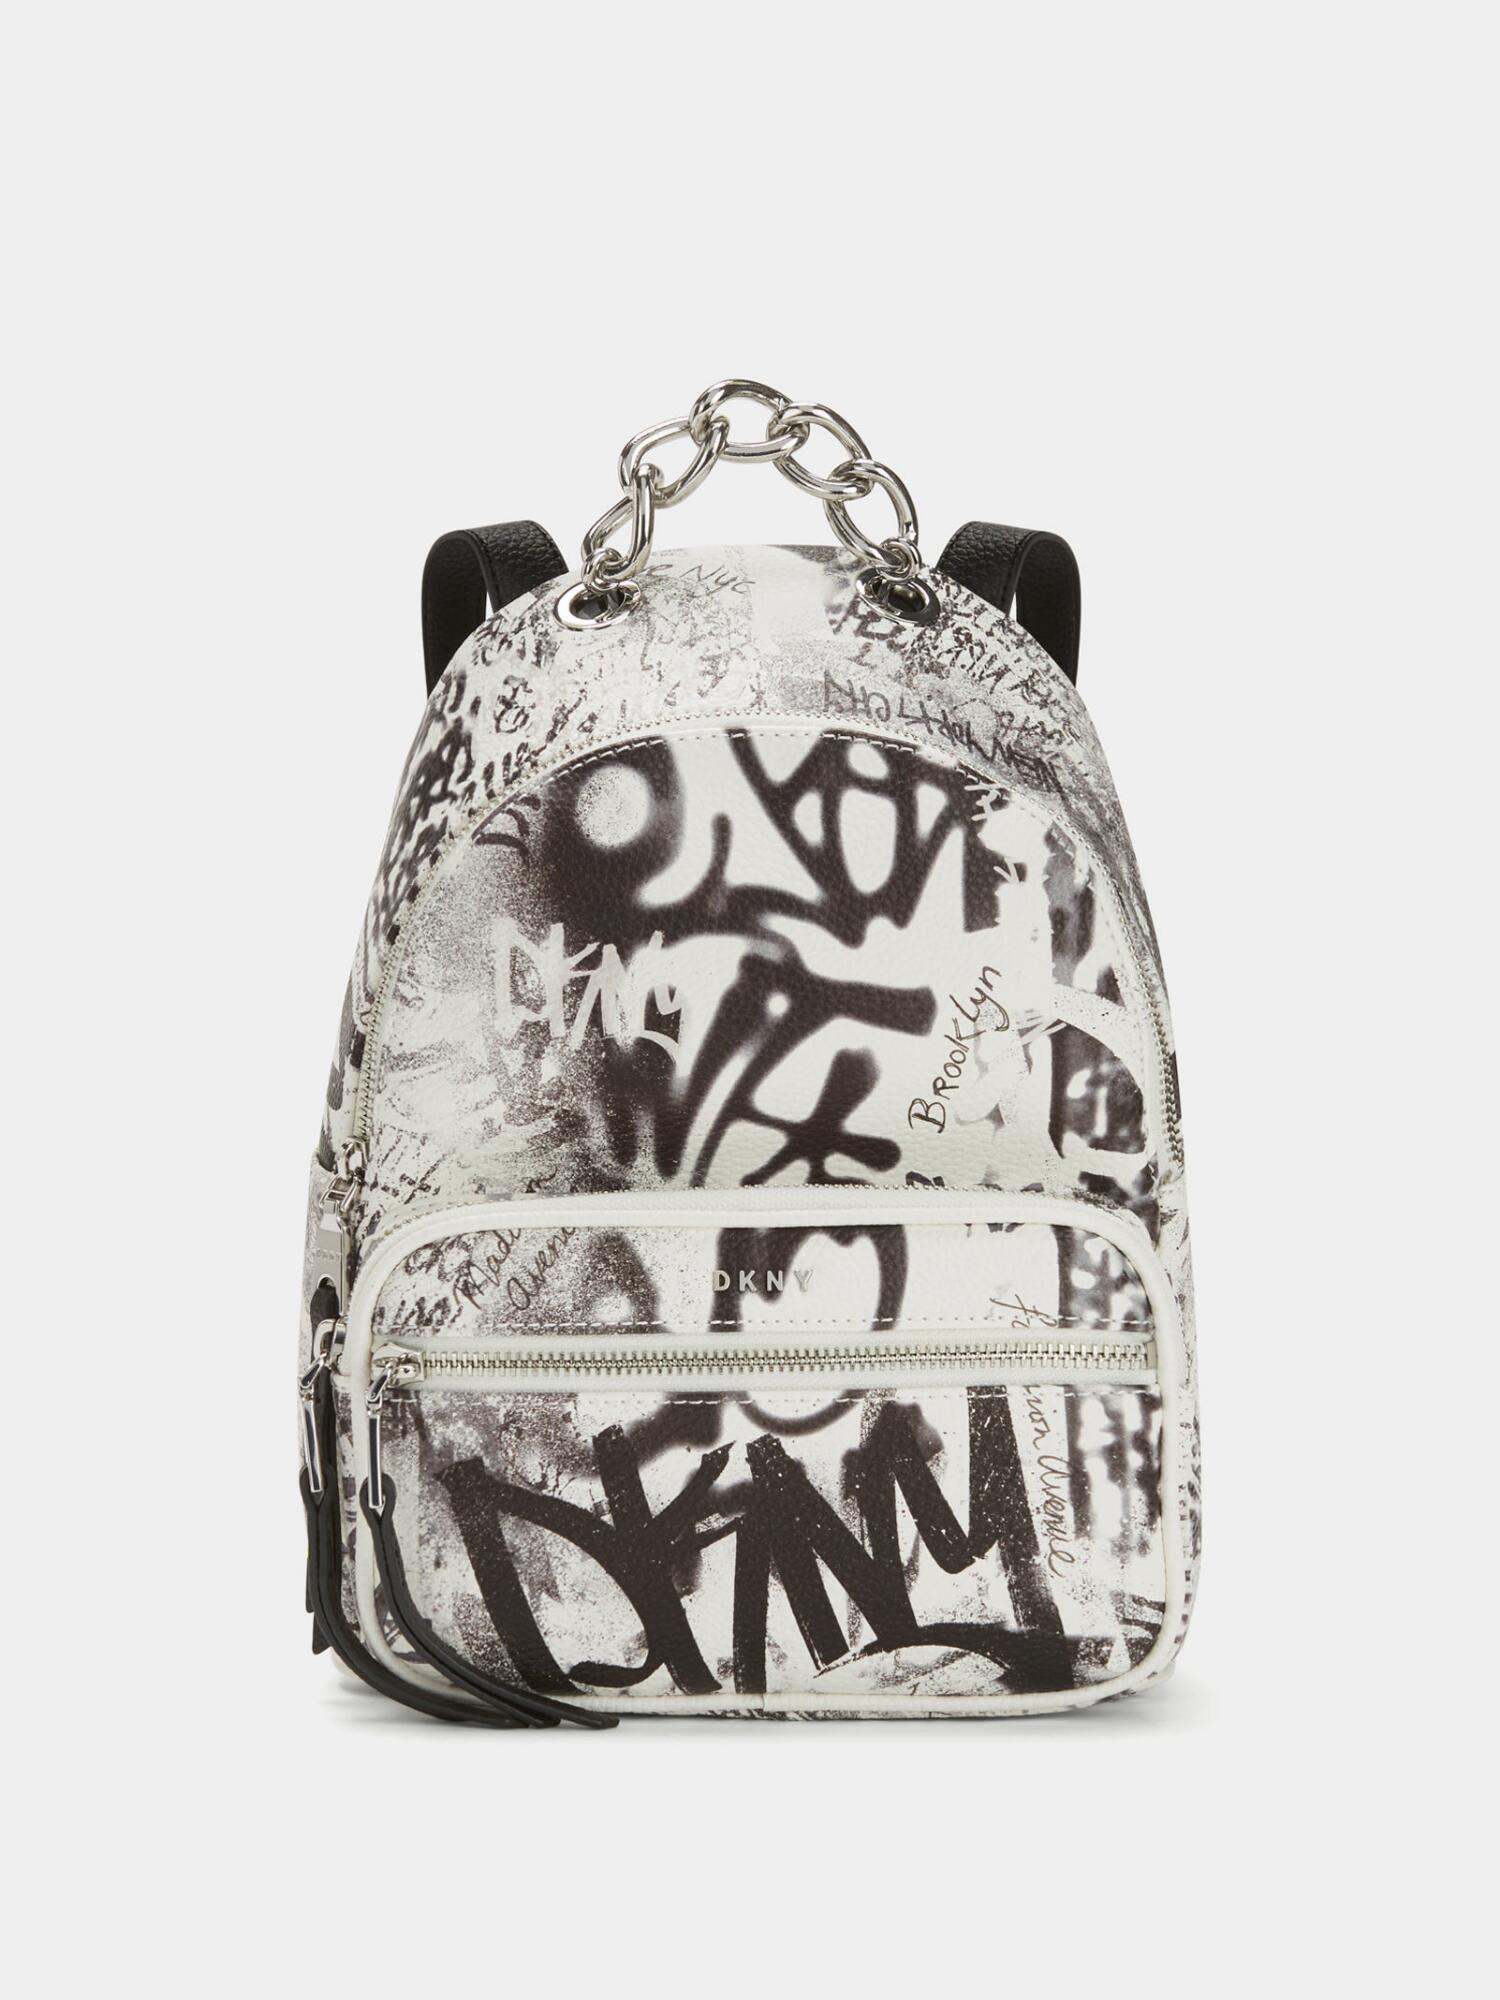 adidas graffiti backpack